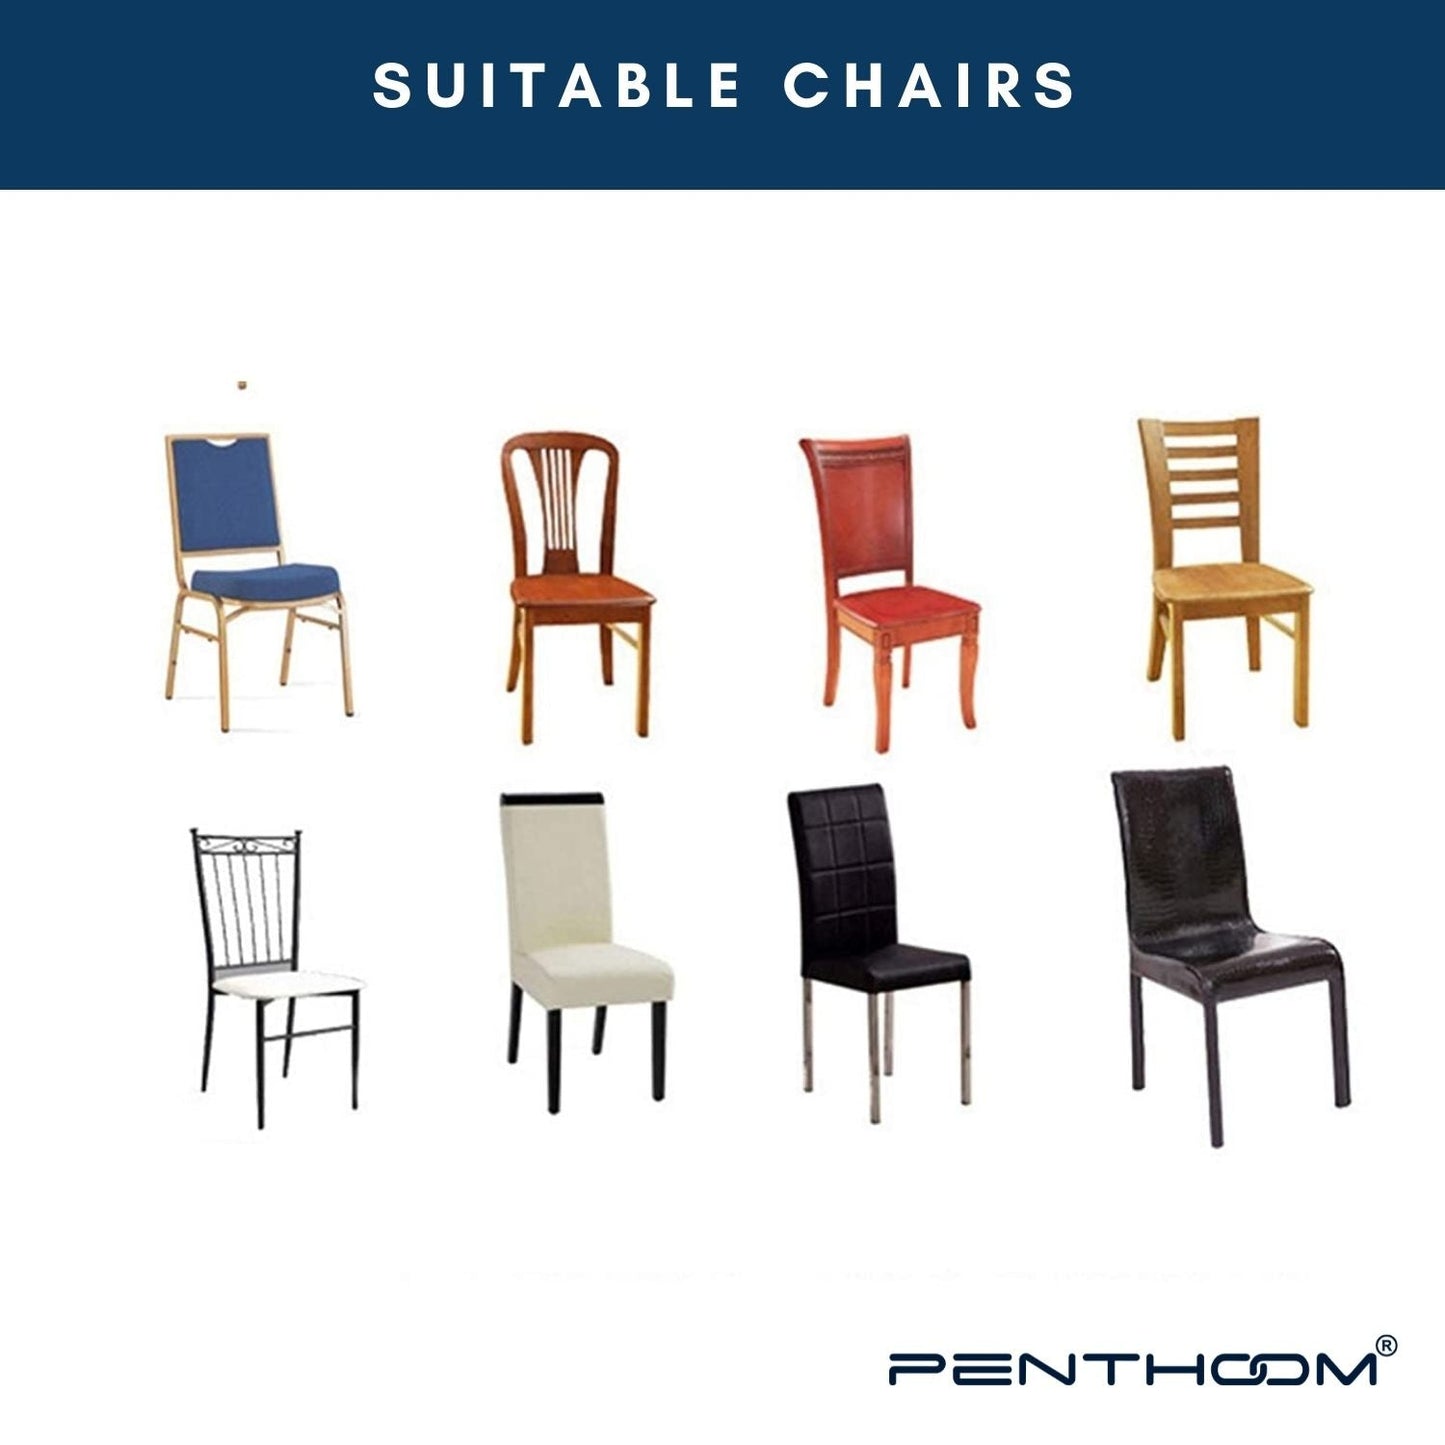 PENTHOOM Elastic Dining Chair Cover - Premium Fabric Seat Slipcover  - Grey Brick Pattern